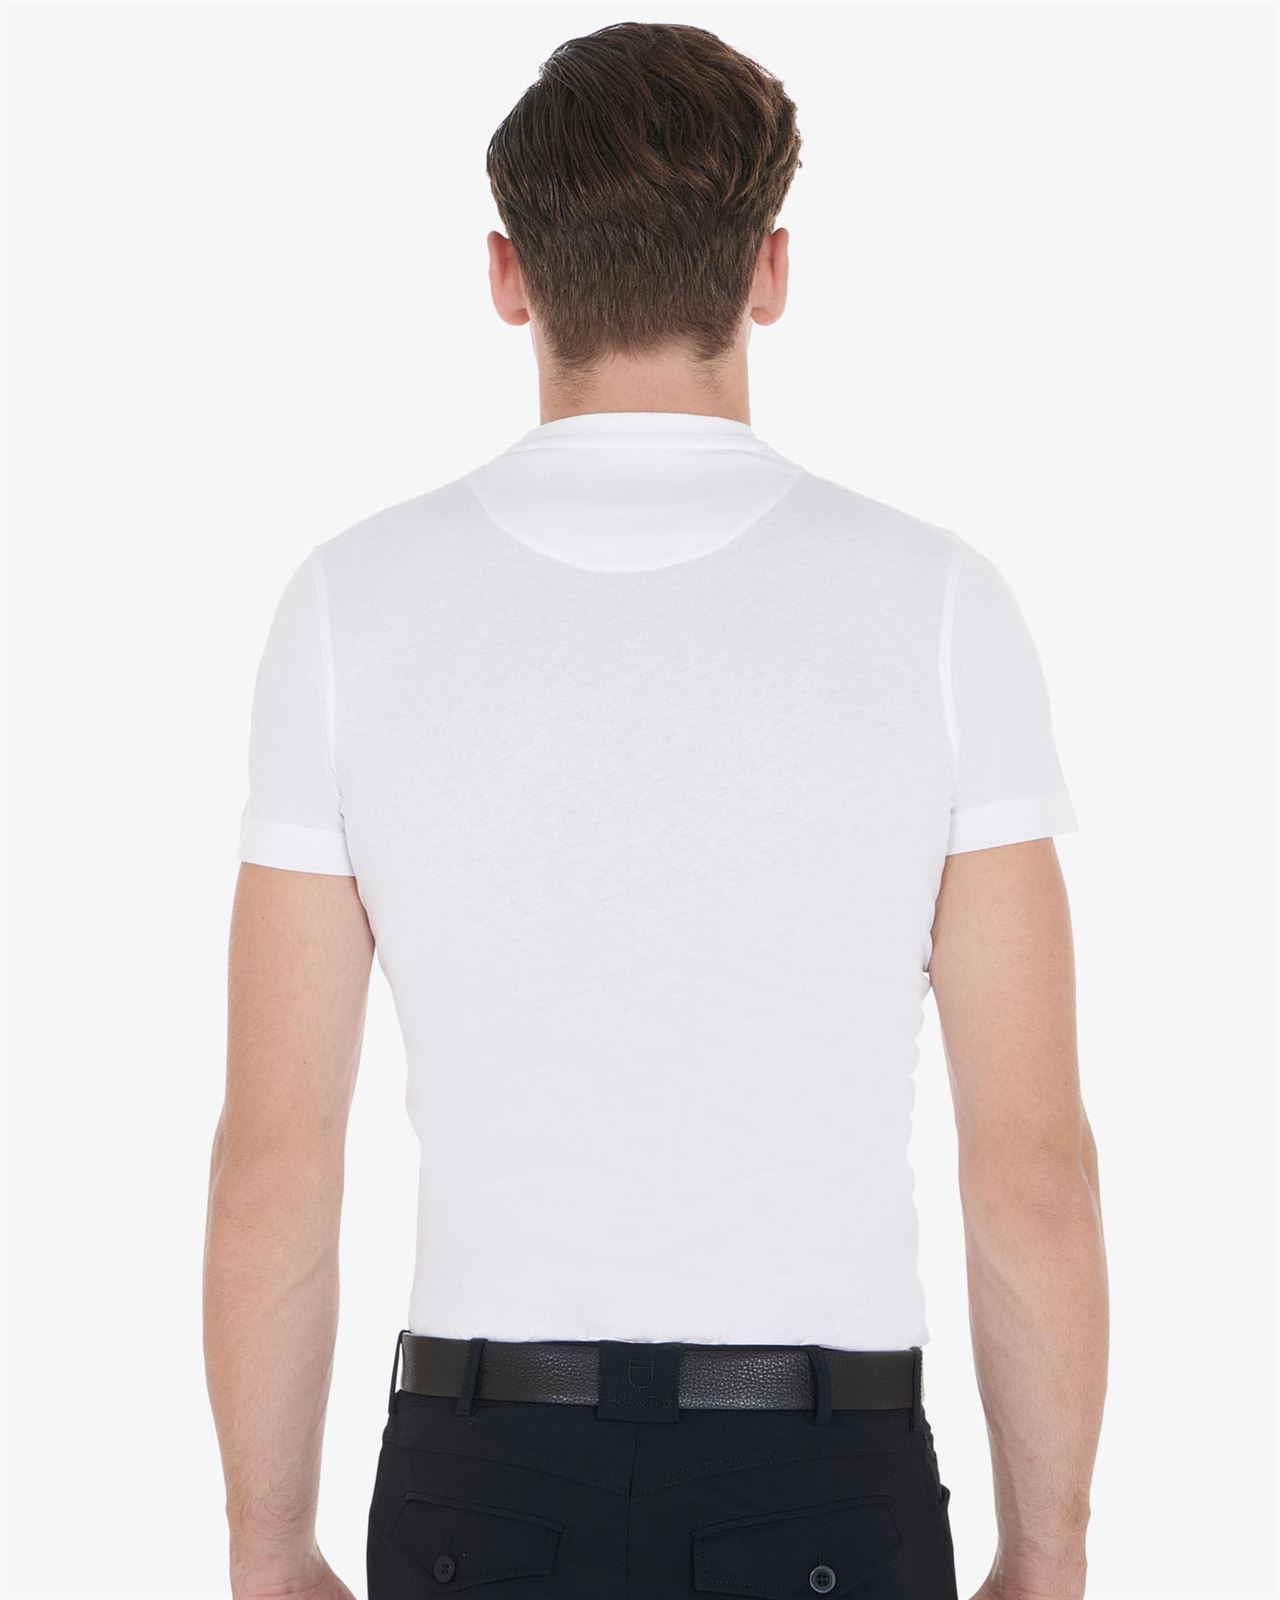 Camiseta caballero EQUESTRO color blanco/negro TALLA M - Imagen 2